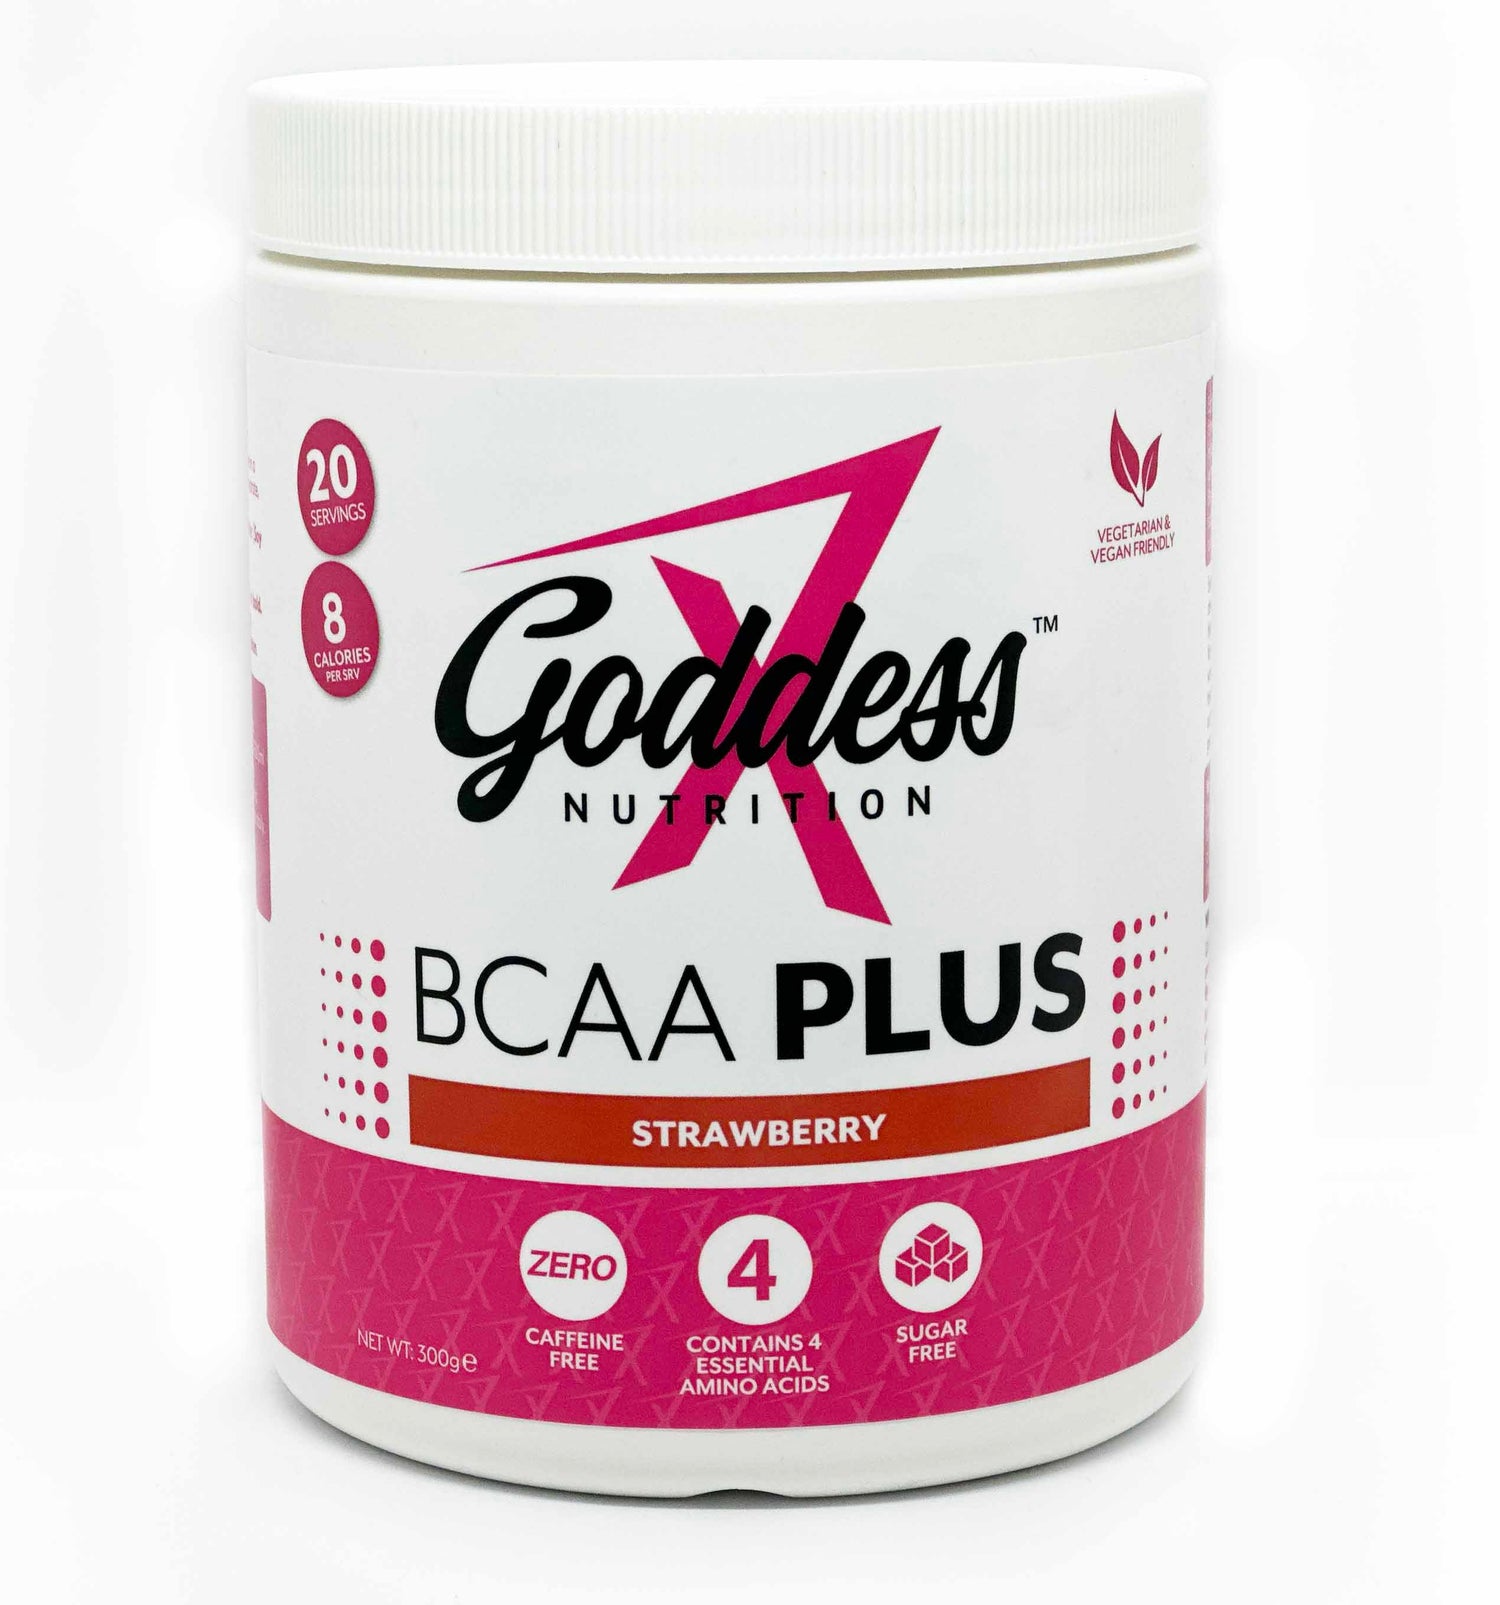 Goddess Nutrition BCAA Plus Strawberry Flavour